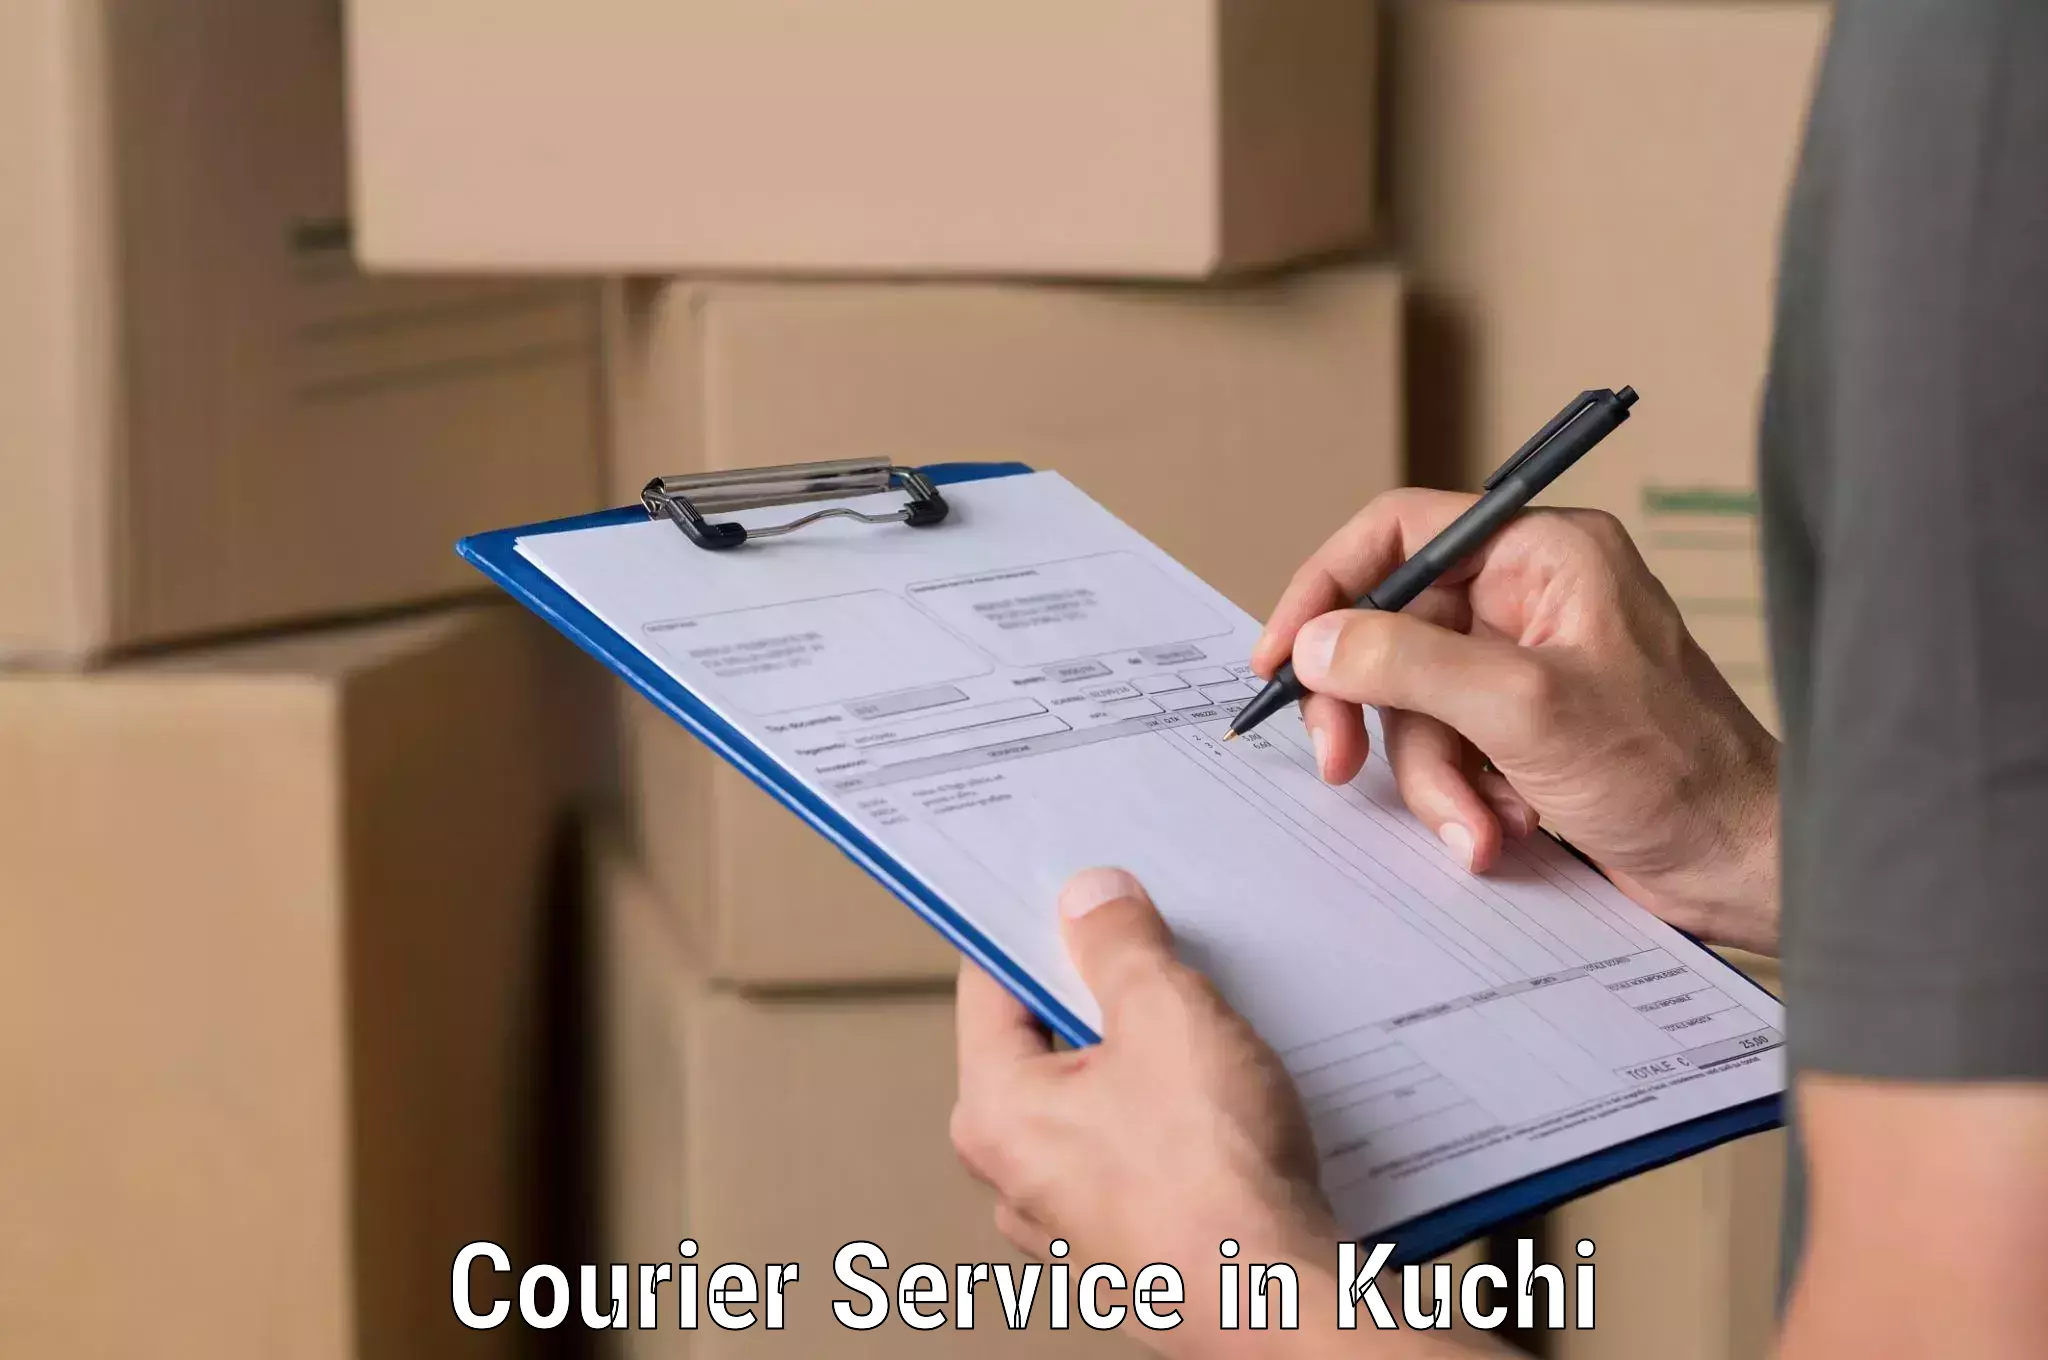 Express logistics service in Kuchi